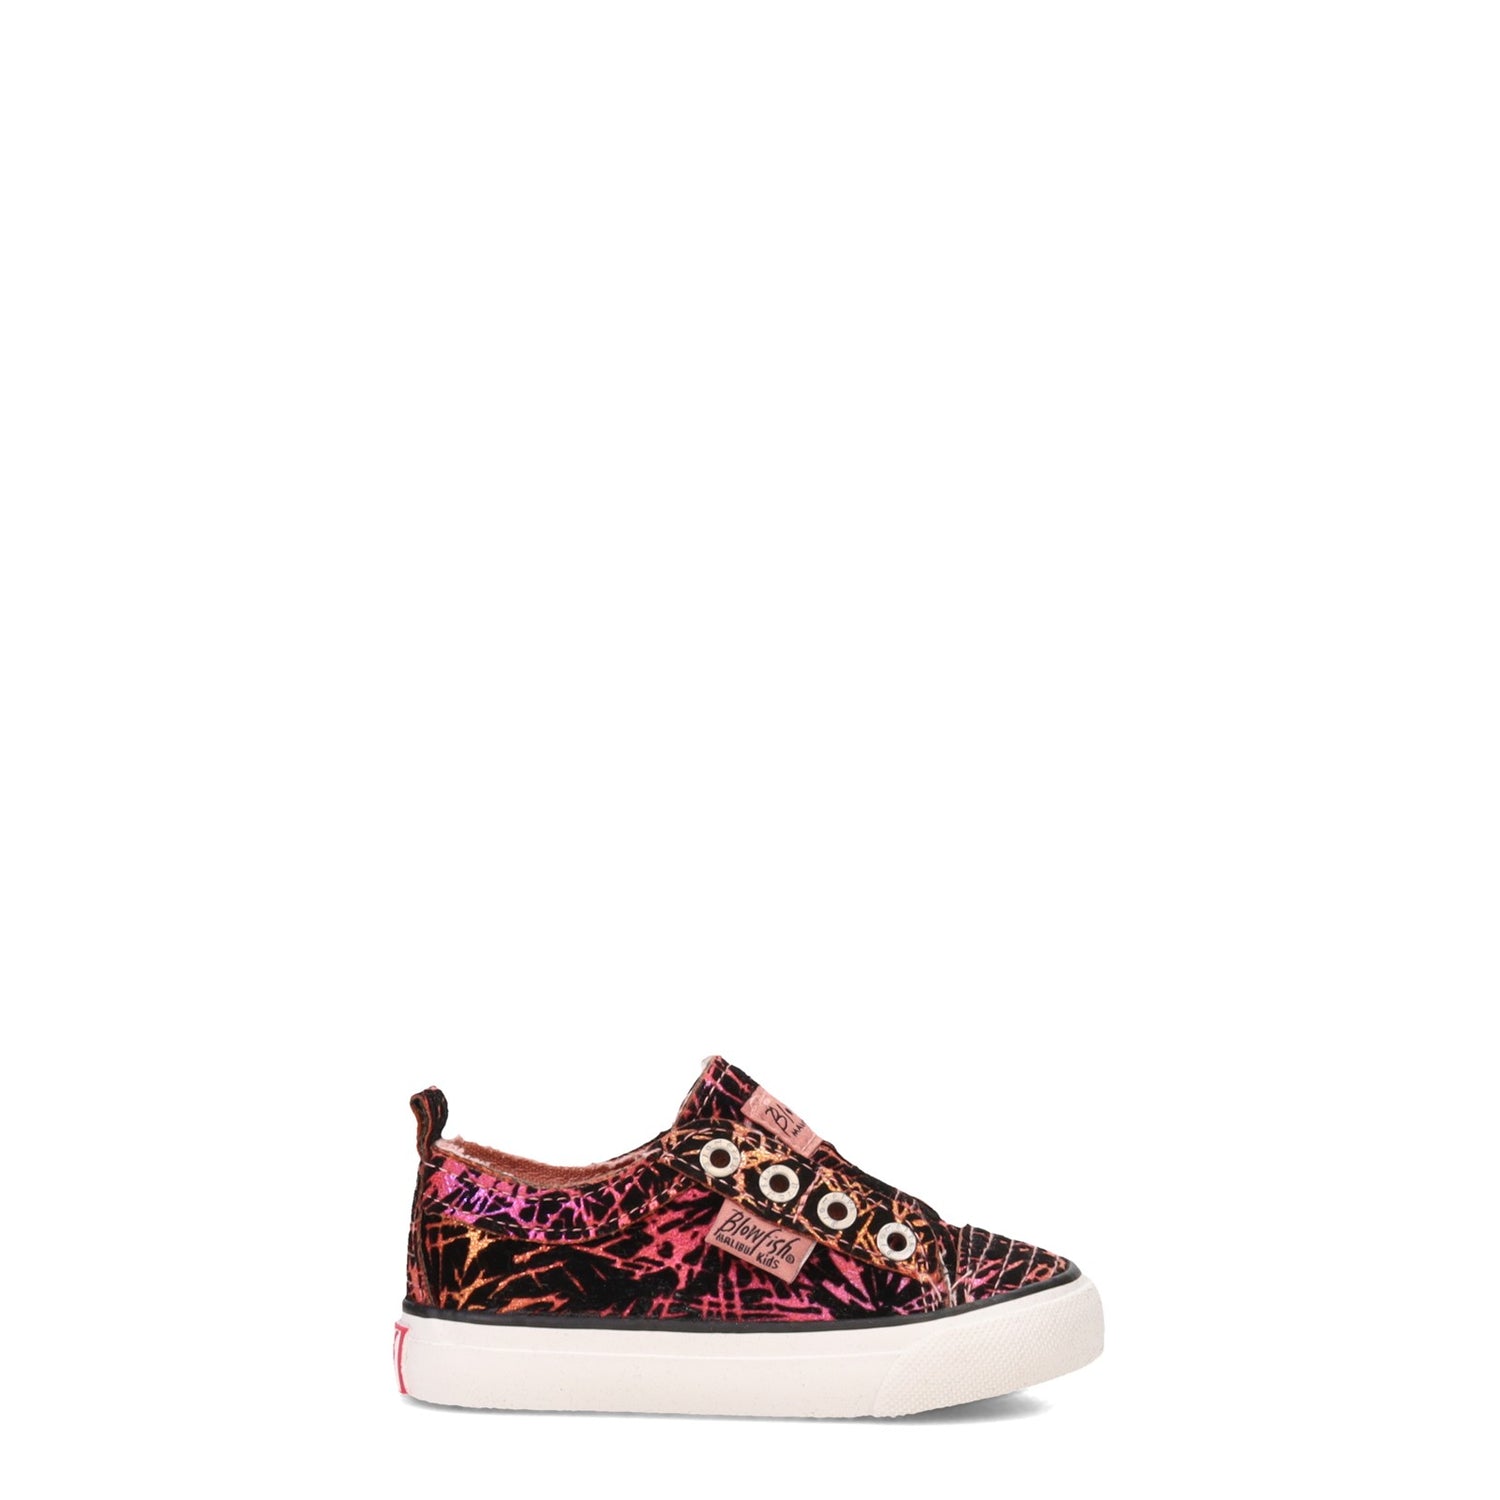 Peltz Shoes  Girl's Blowfish Malibu Playwire Sneaker - Toddler & Little Kid PINK ROCKSTAR ZS-0325T PIKRS